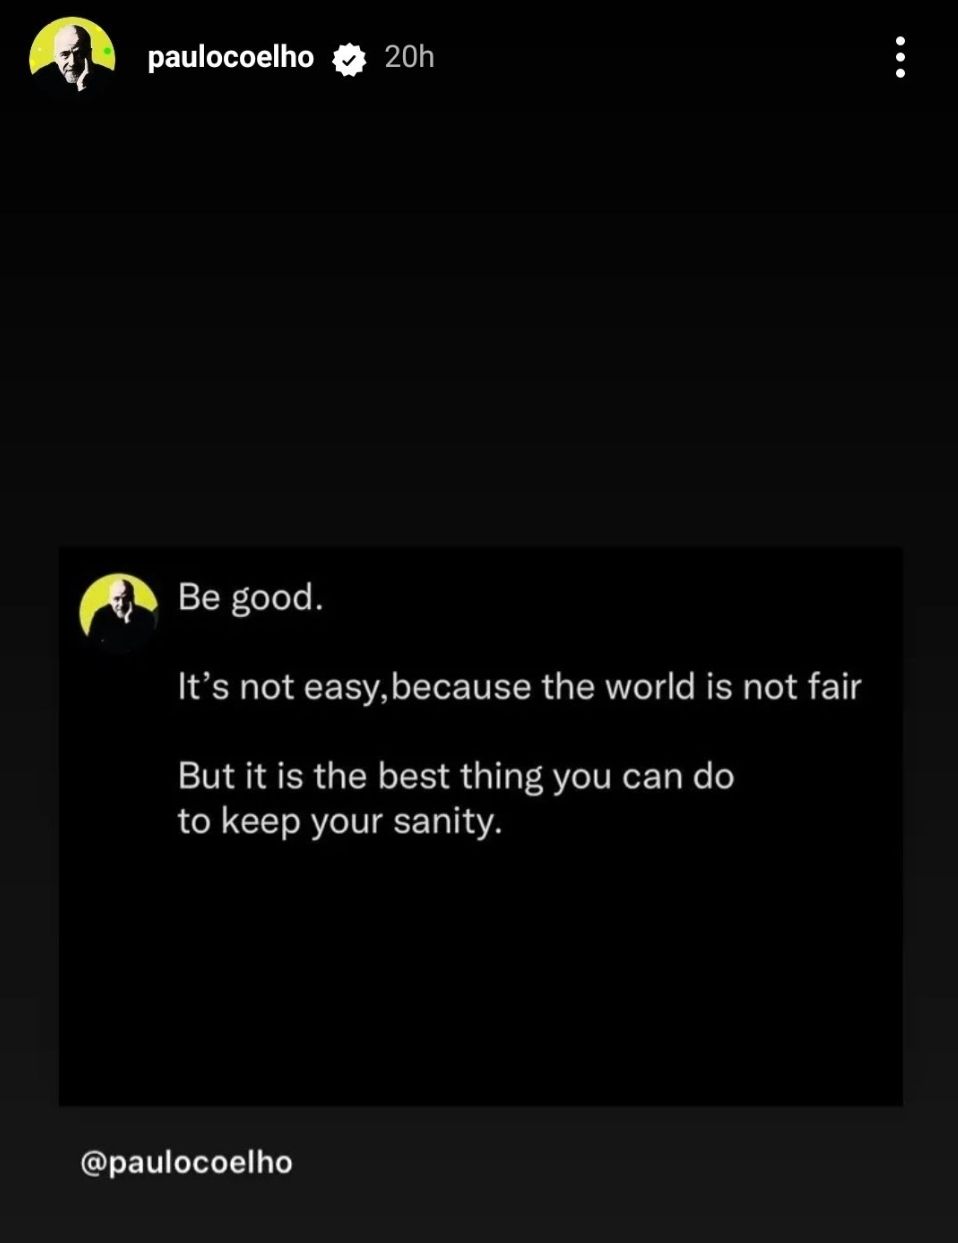 Postingan Paulo Coelho tentang pentingnya menjadi orang baik./Instagram/@paulocoelho